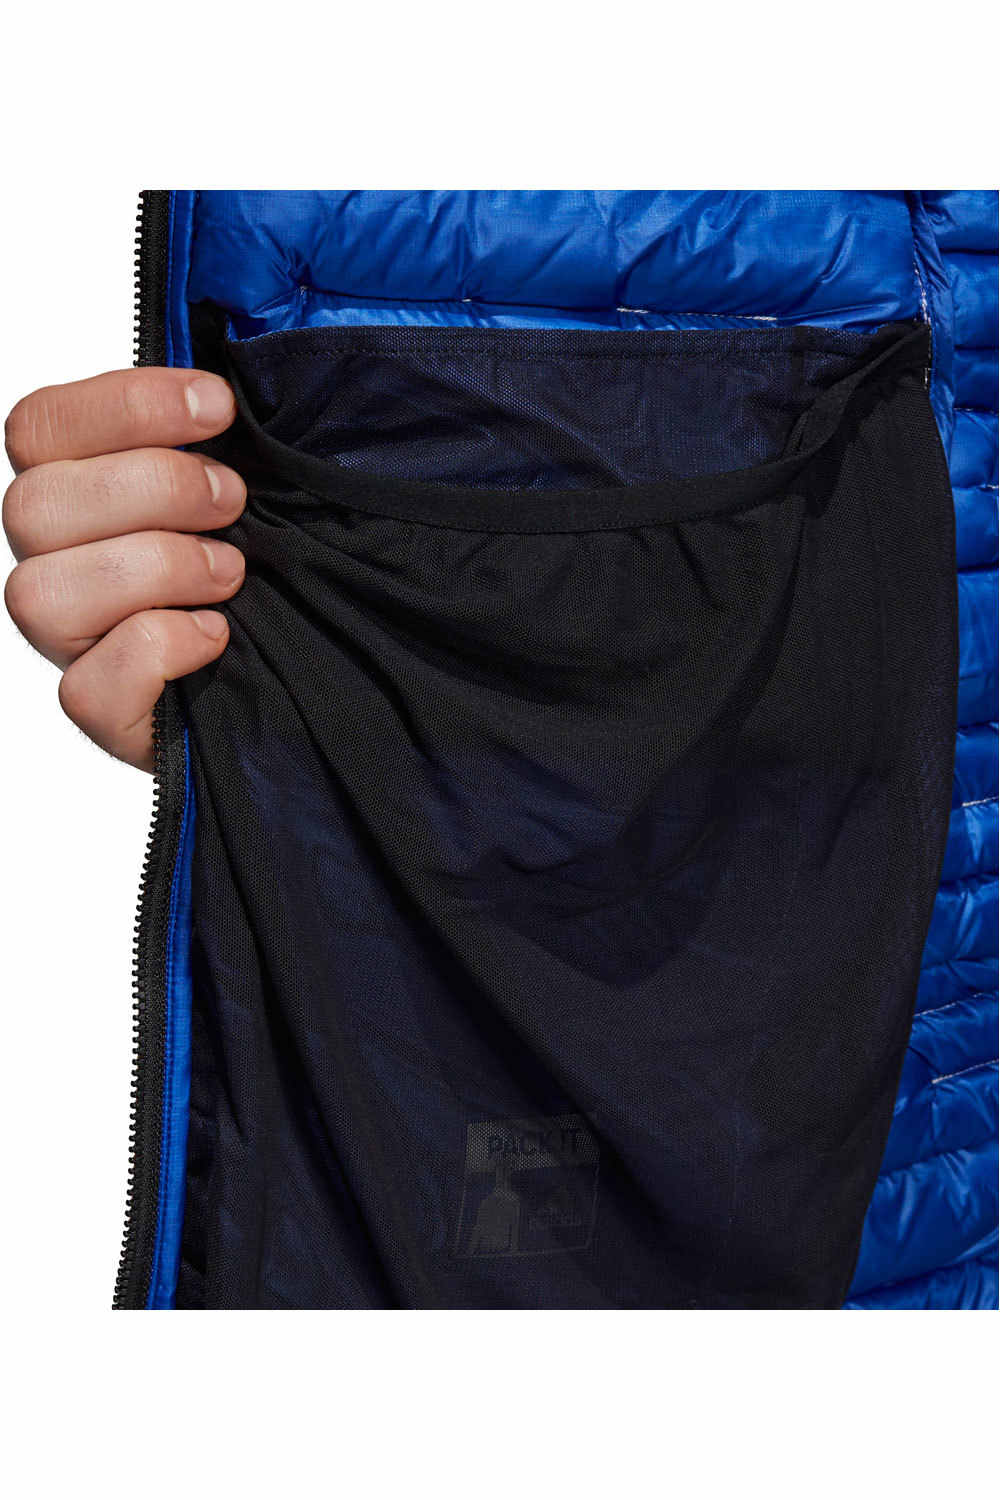 adidas chaqueta outdoor hombre CLIMAHEAT JKT 03